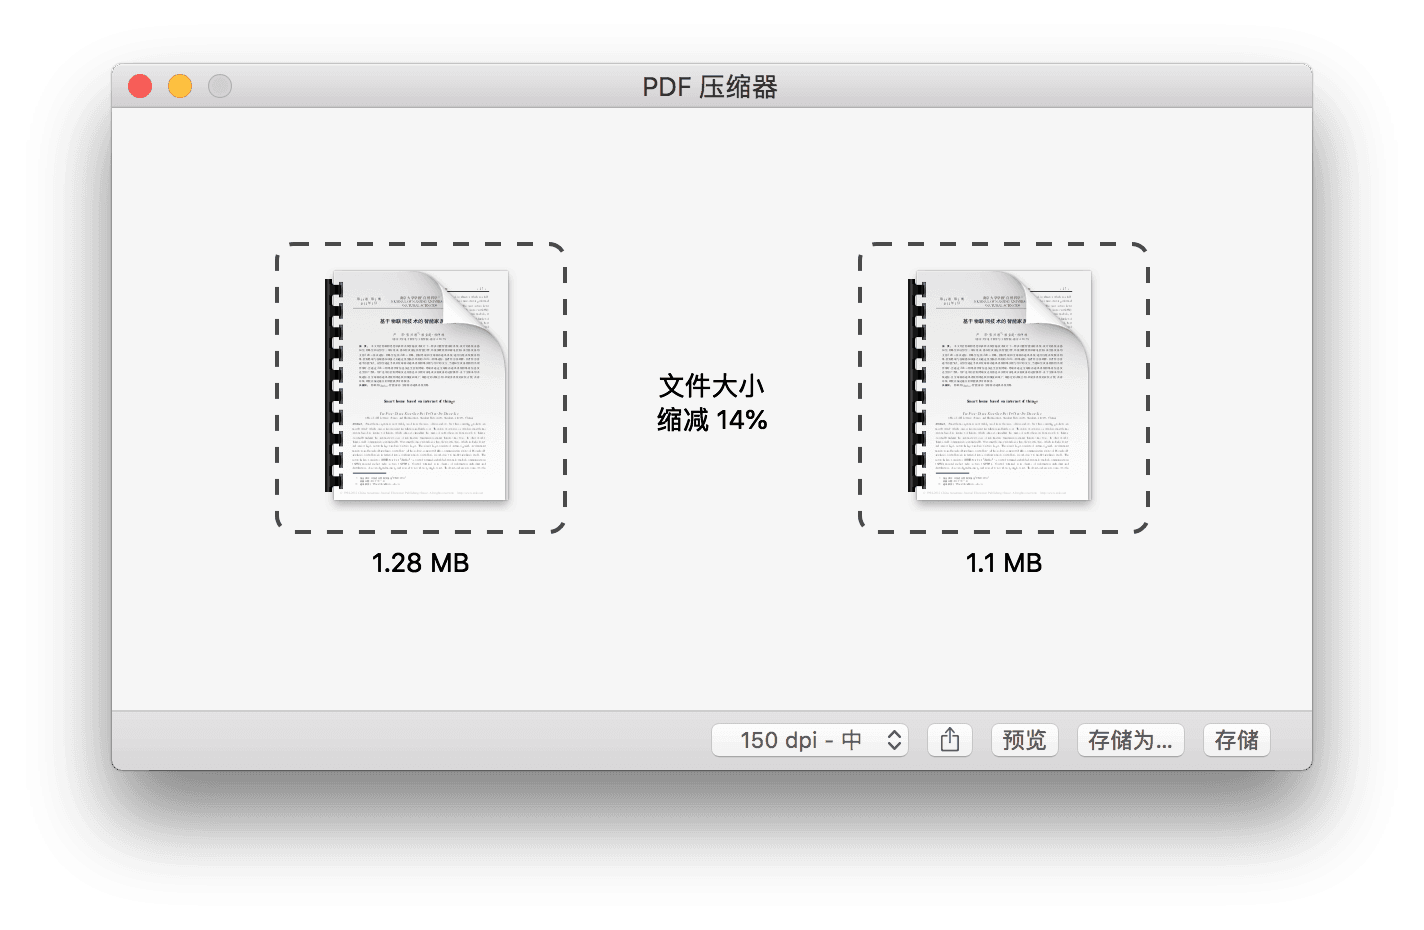 PDF Squeezer for Mac(强大的PDF文件压缩工具)